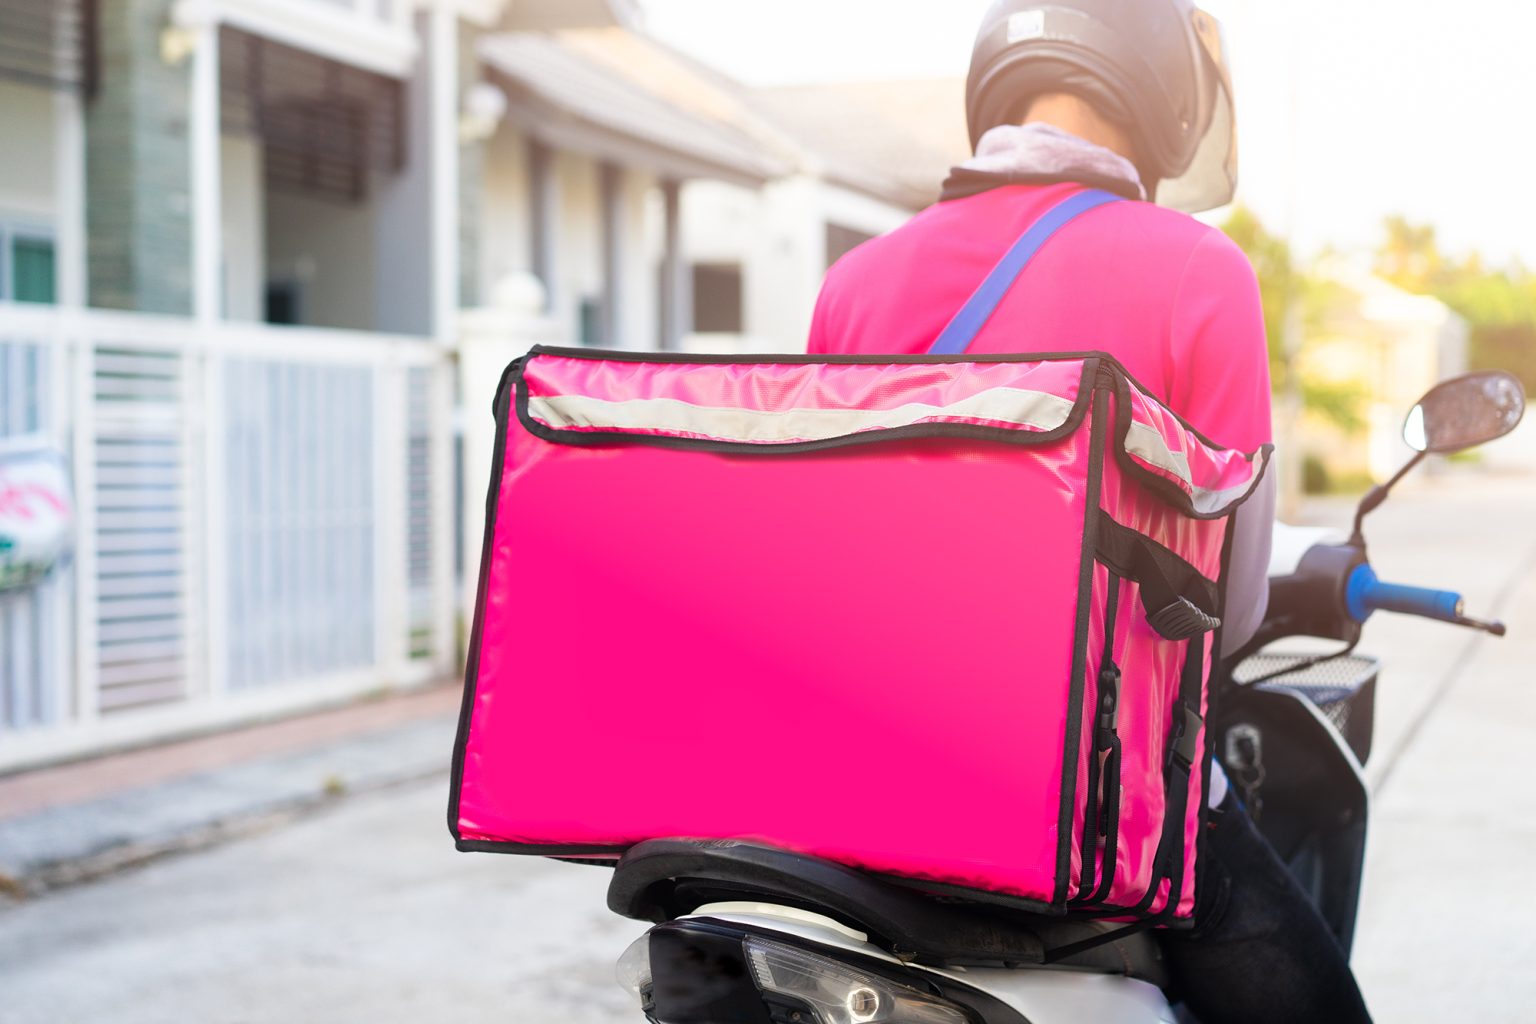 Motorbike delivery man wearing pink uniform